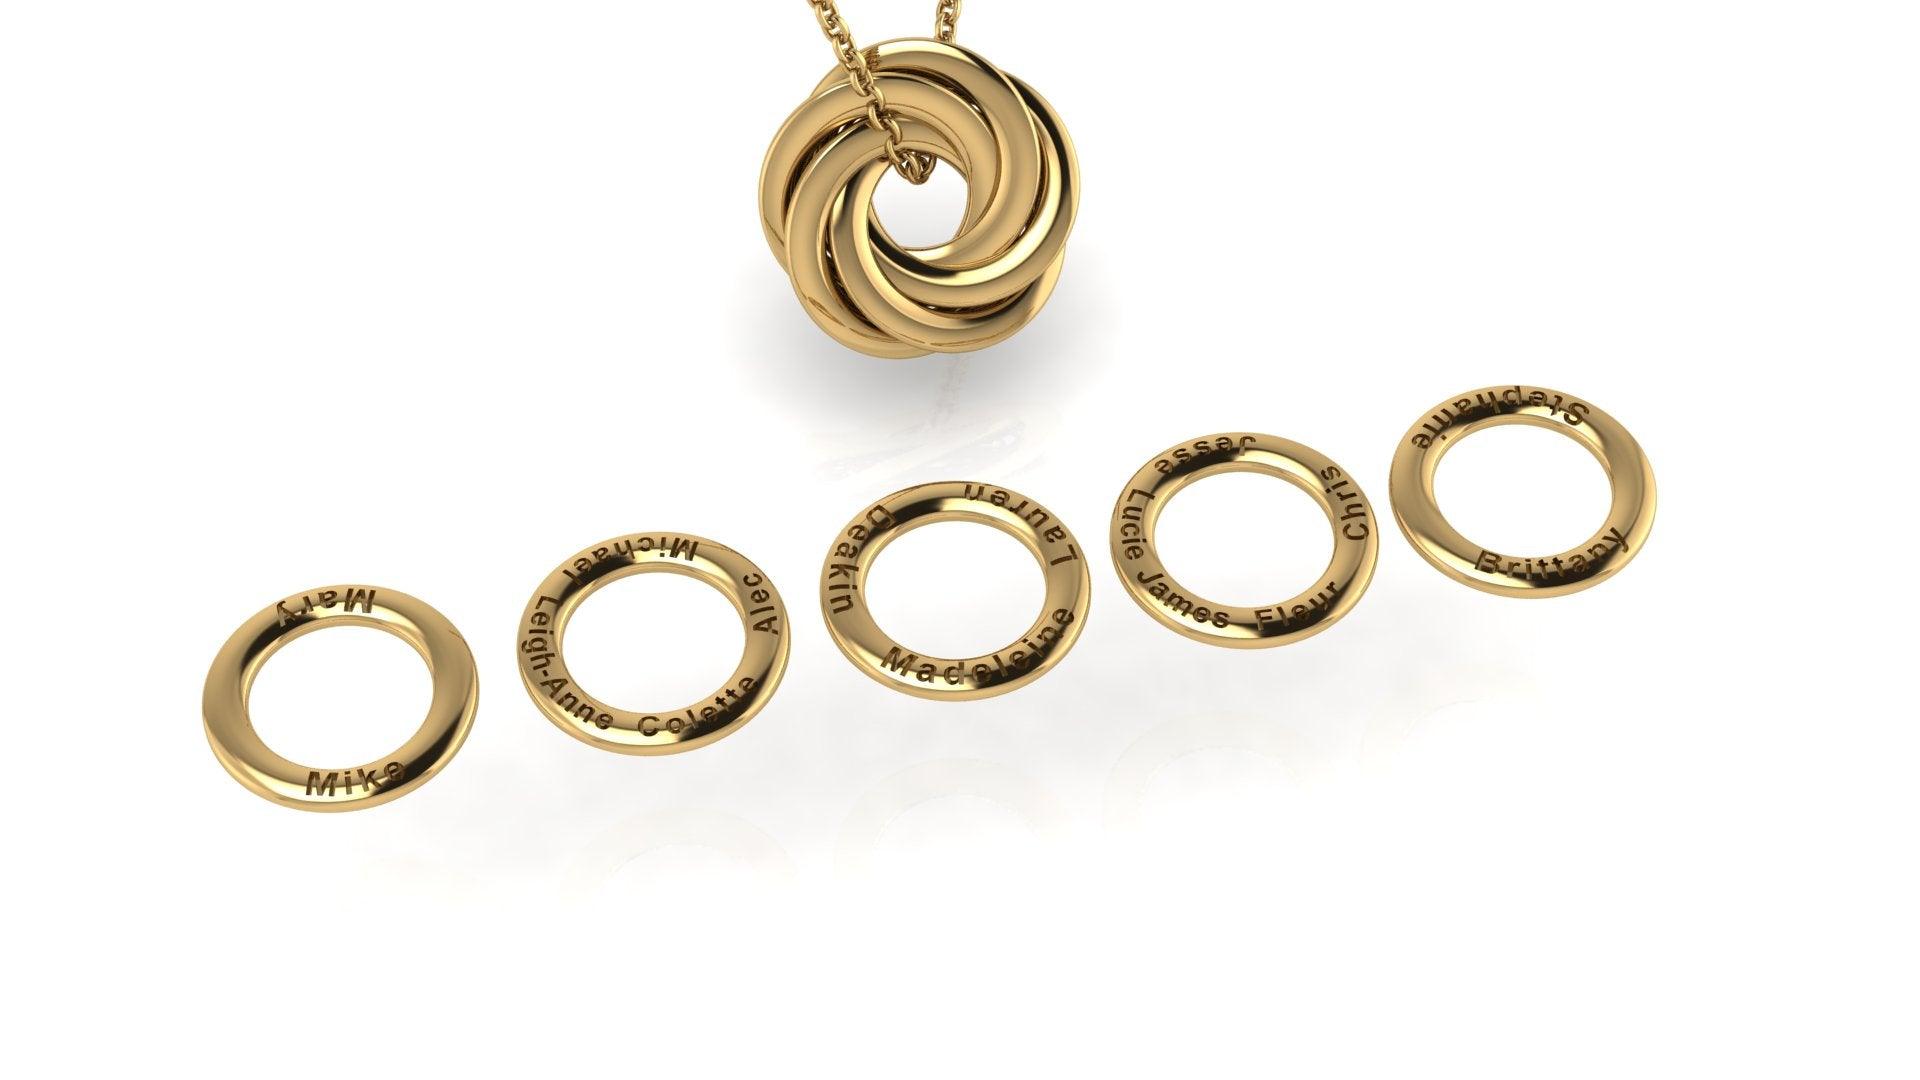 Personalized 5 Interlocking Rings Necklace - Thenetjeweler